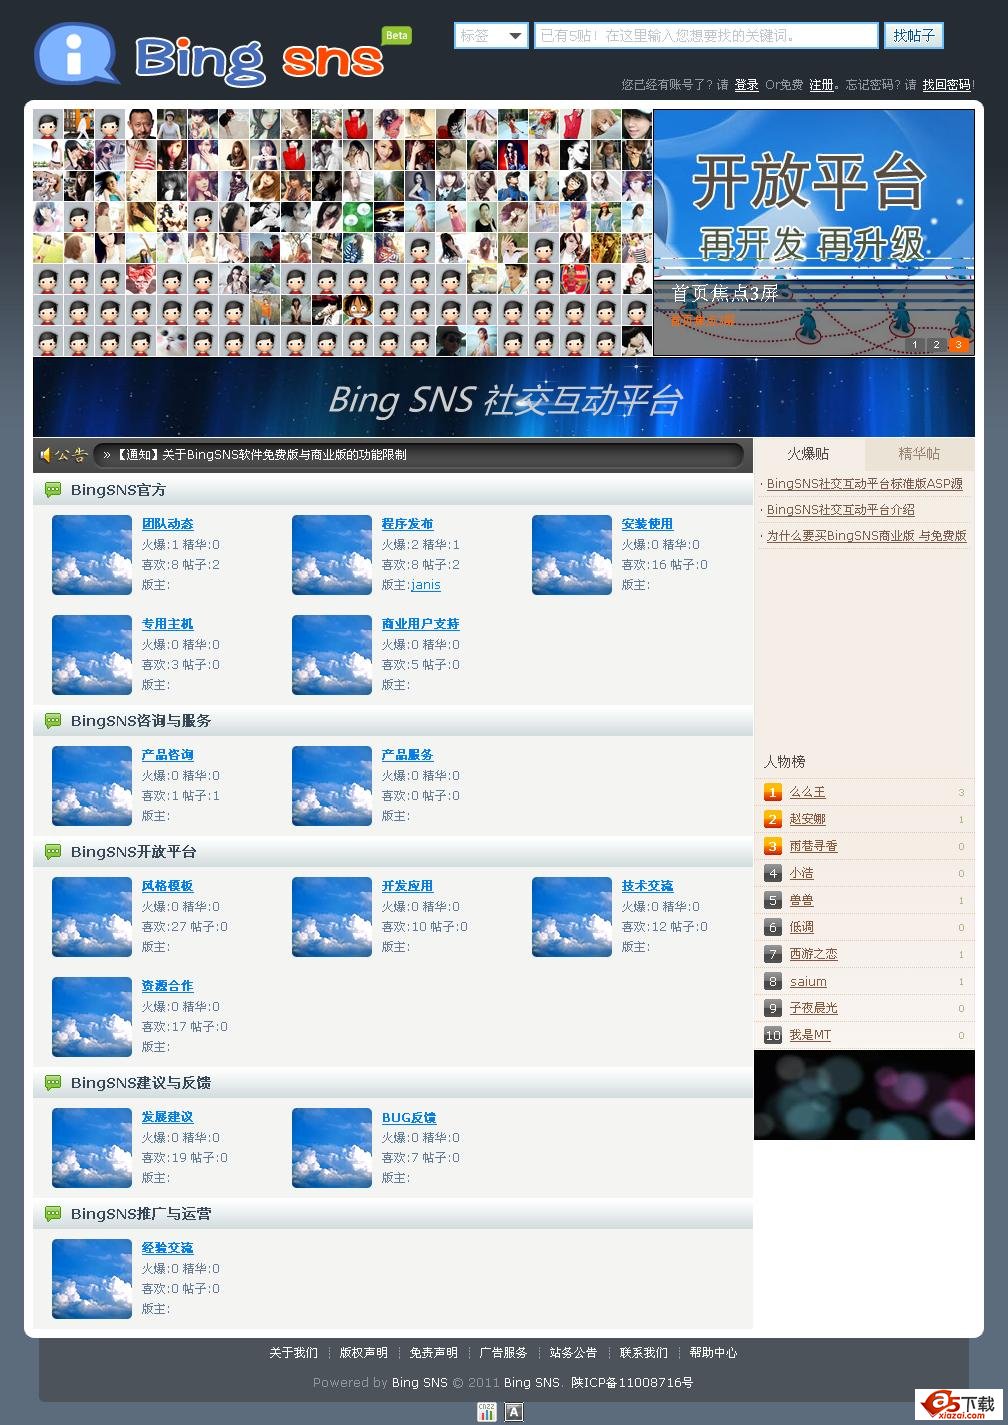 BingSNS社交互动平台 V2.6 微博控